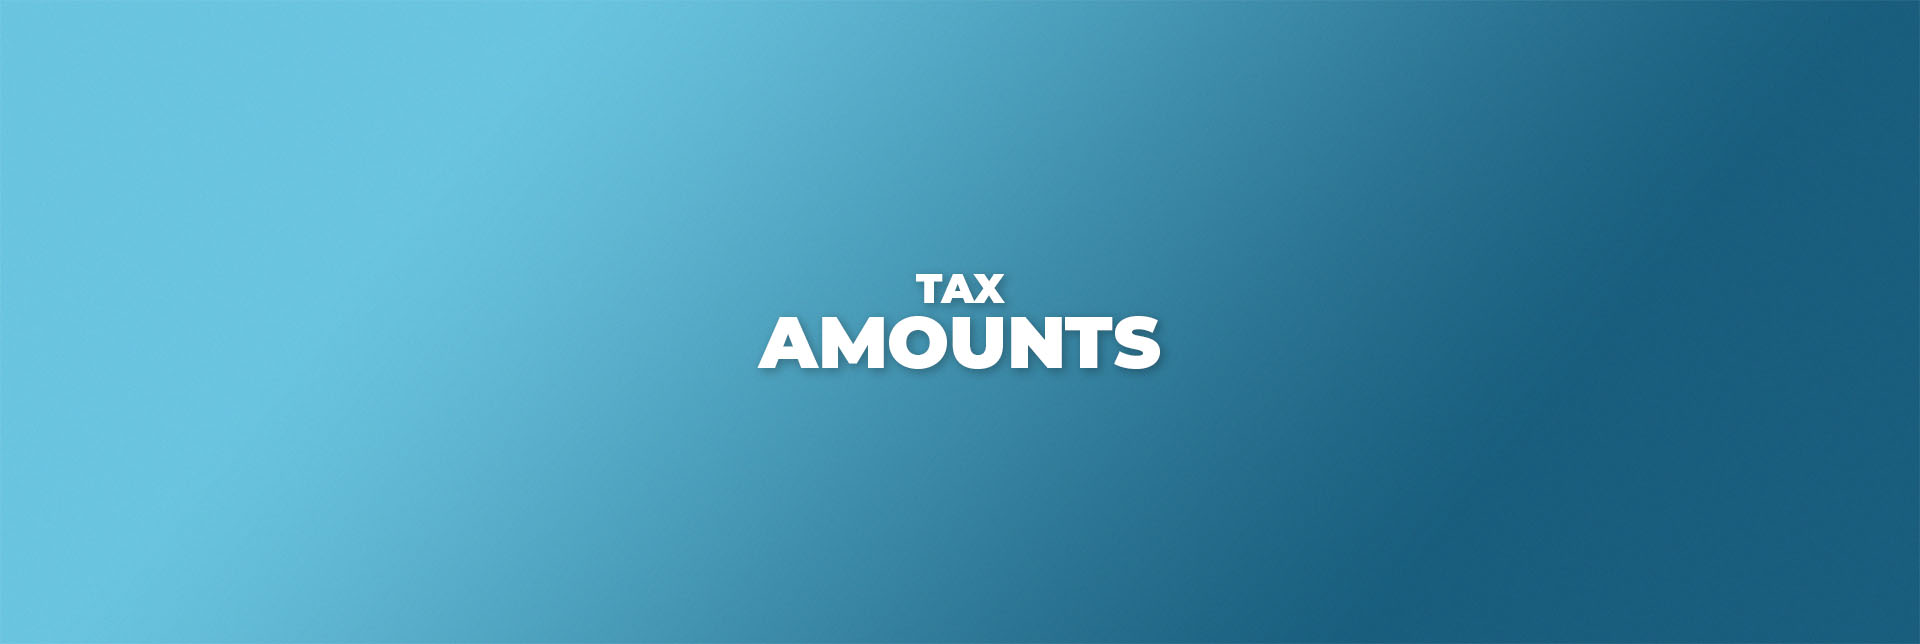 Tax Amounts